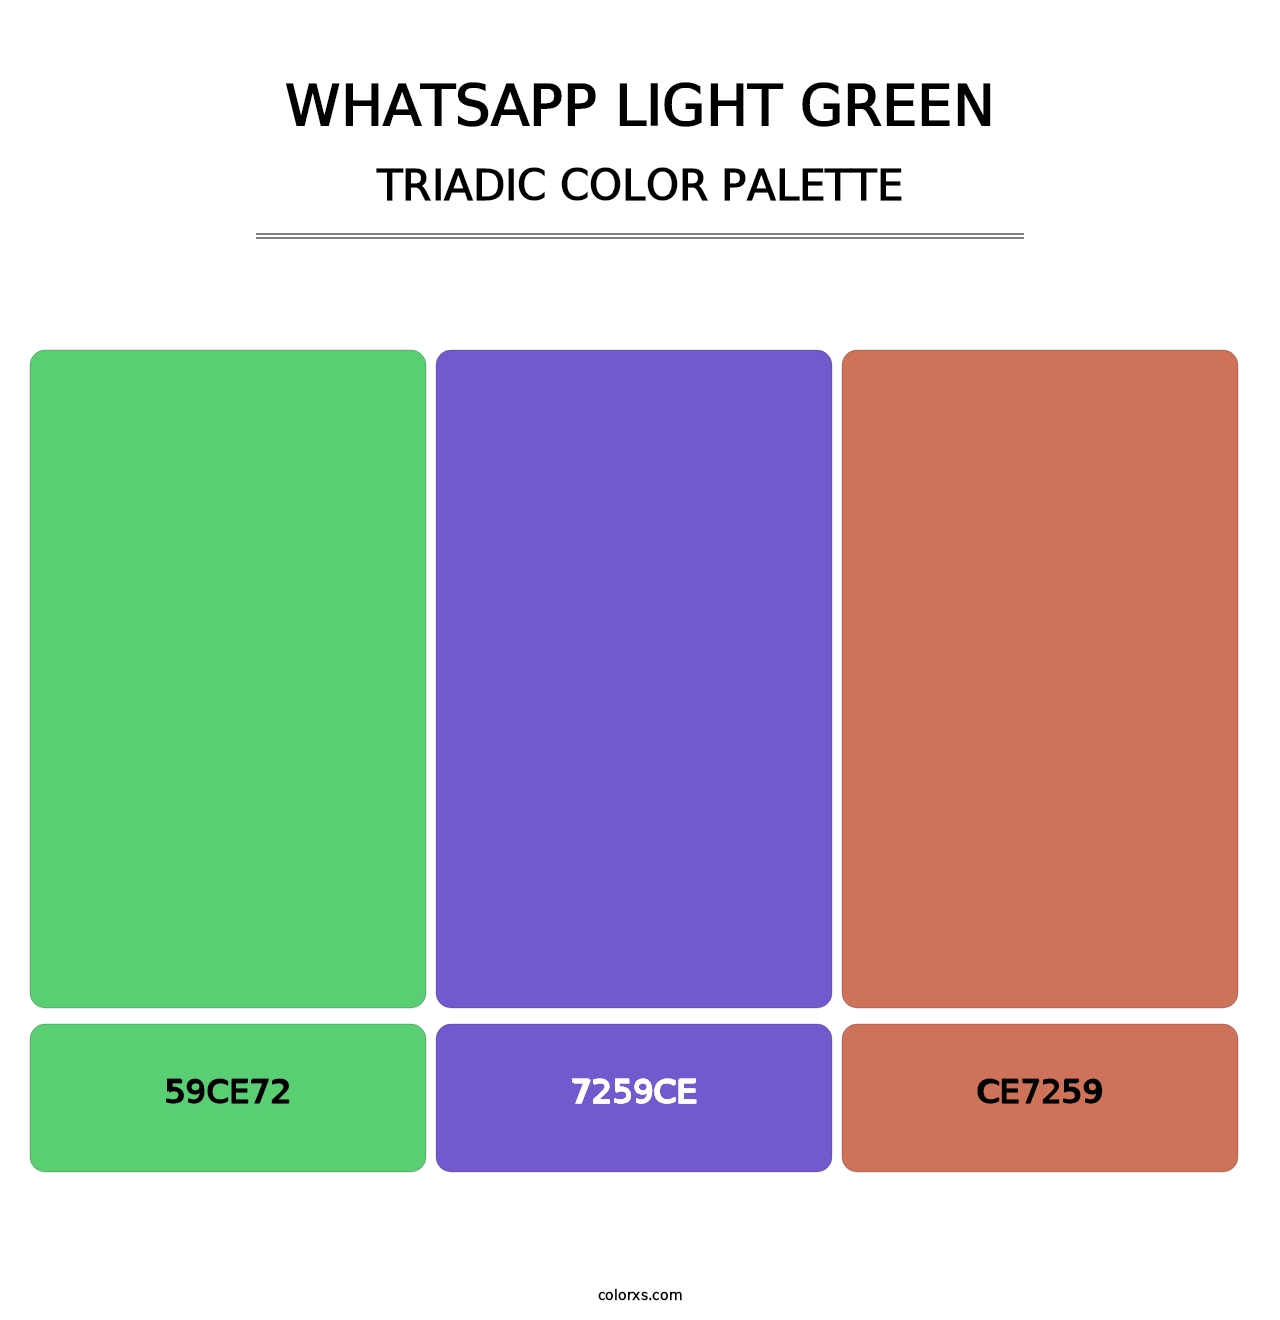 WhatsApp Light Green - Triadic Color Palette